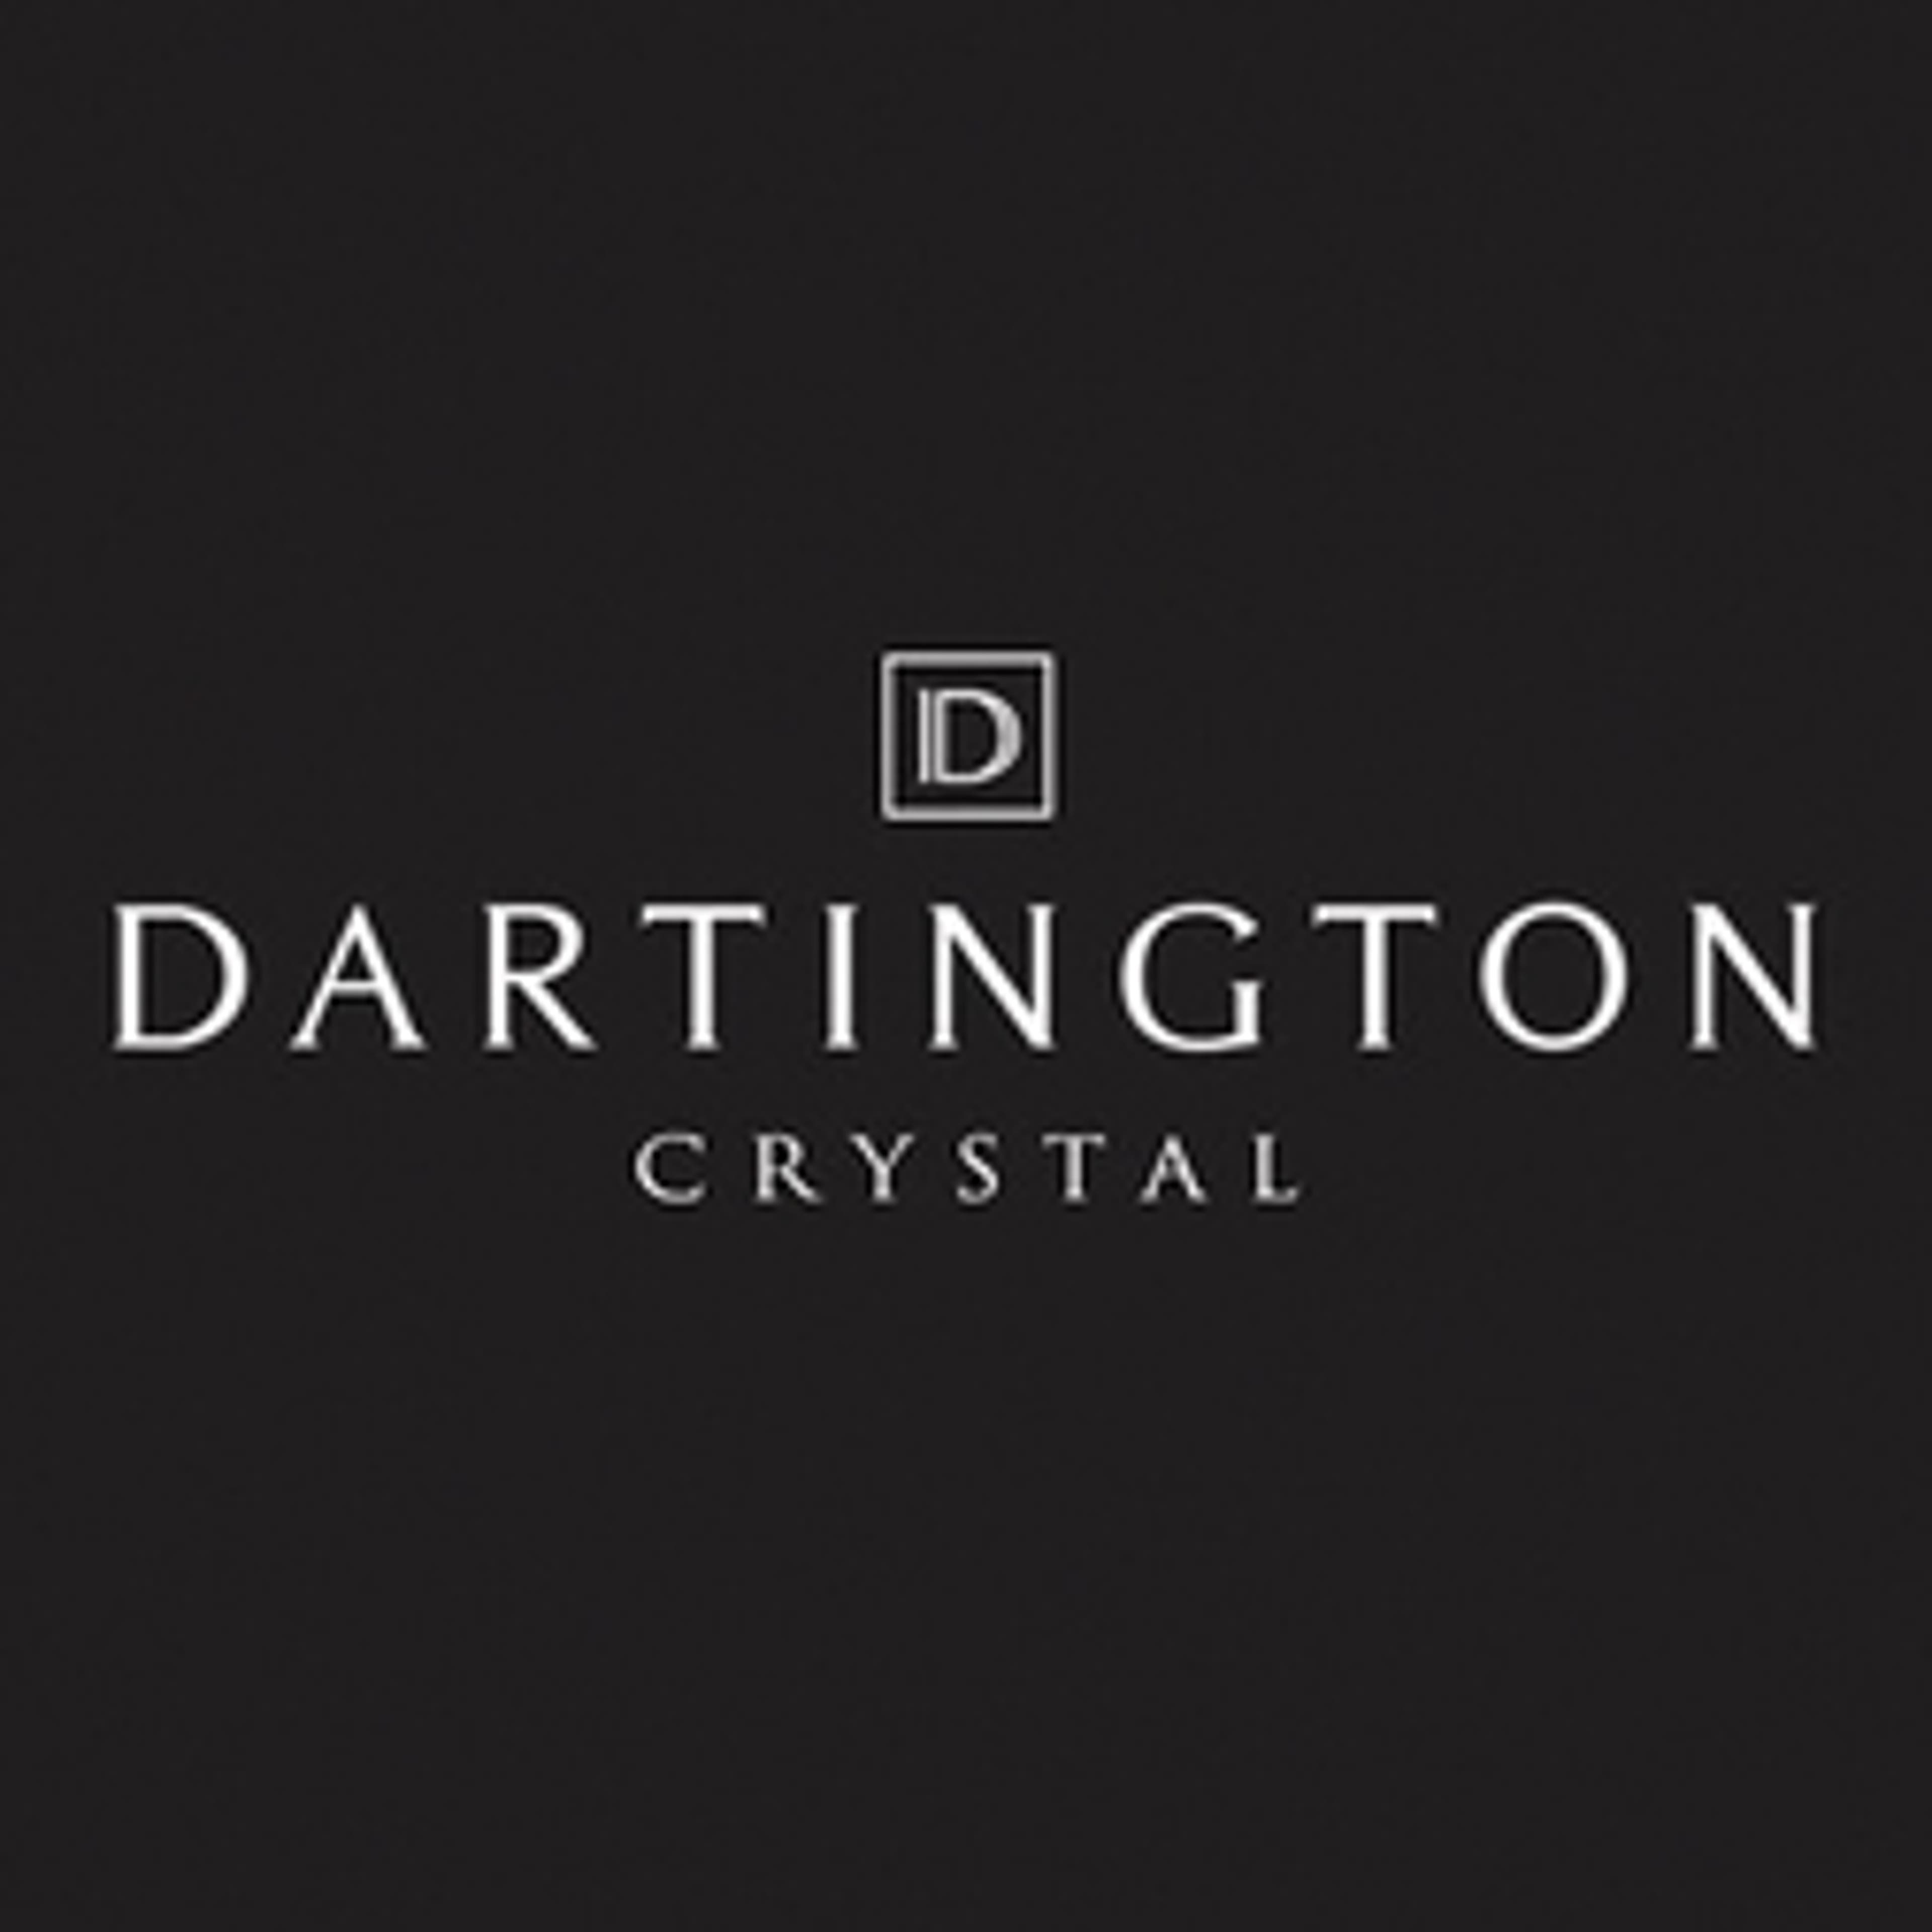  Dartington Crystal 